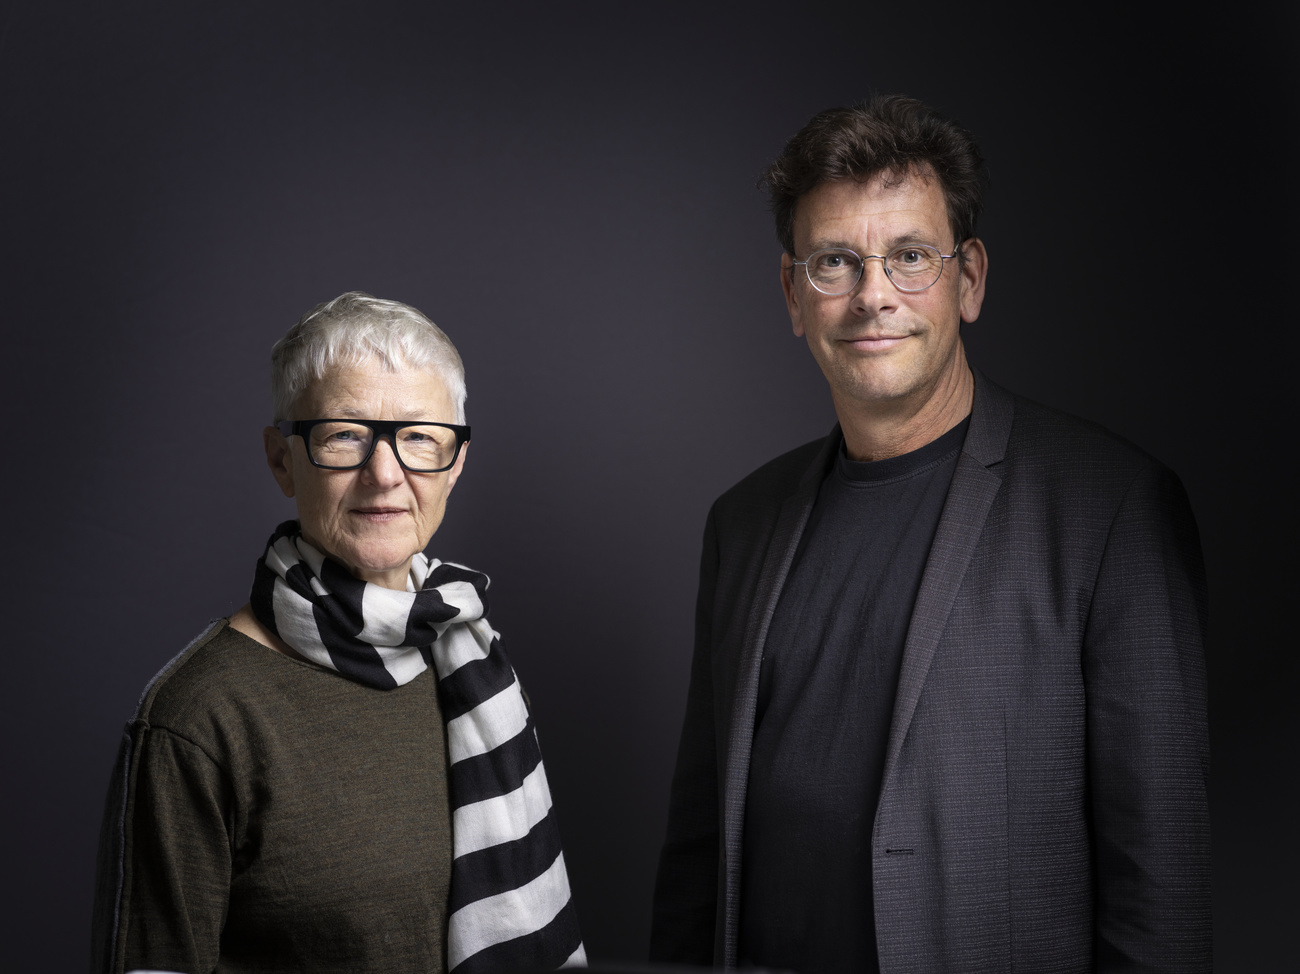 Karin Sander和Philip Ursprung是 鄰裡 專案的策劃者。